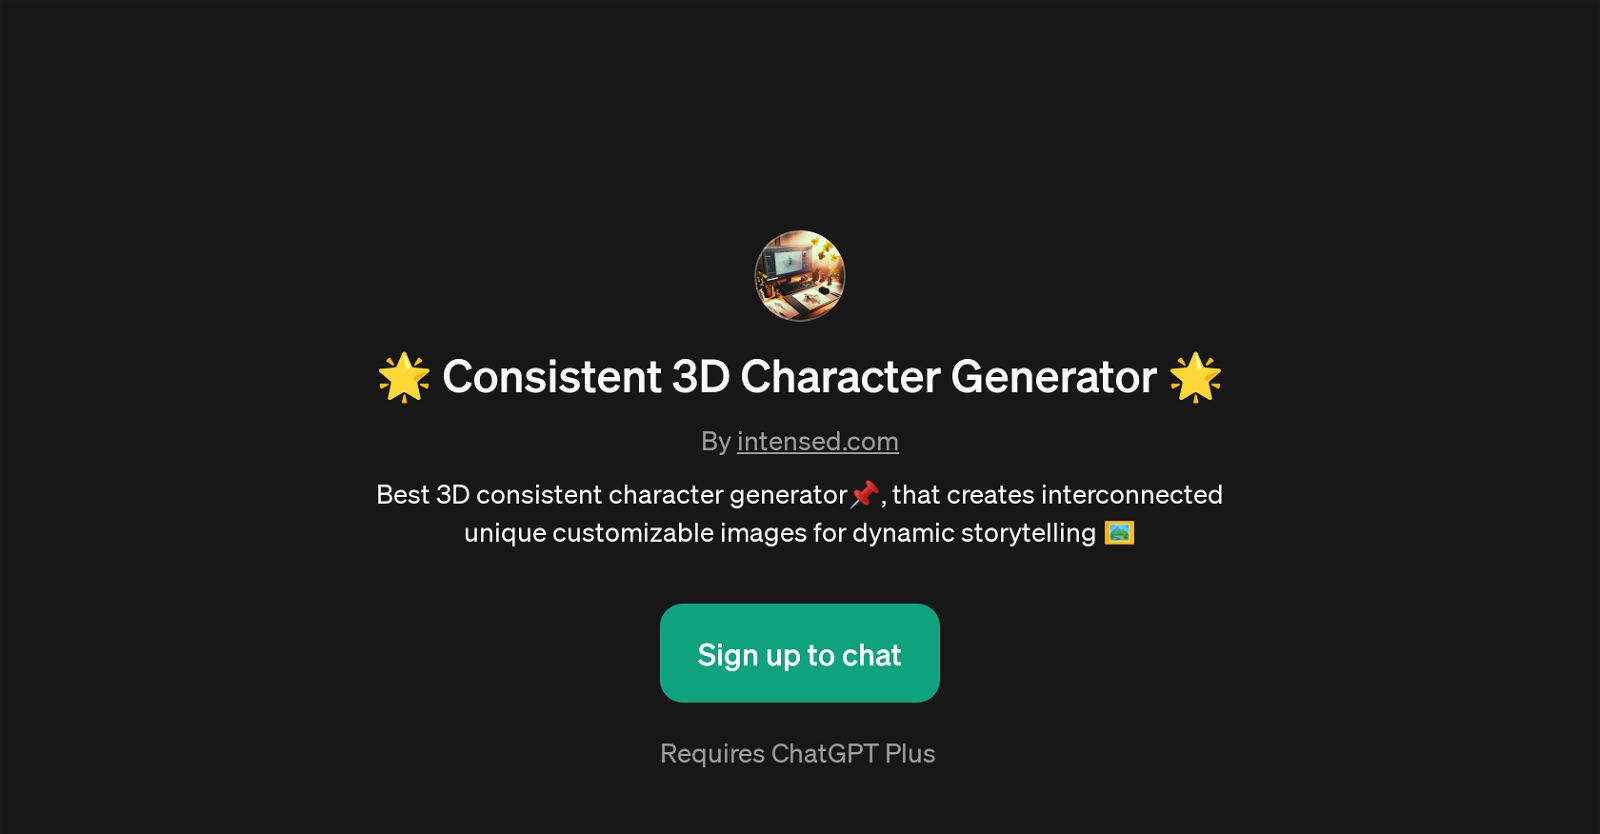 Consistent 3D Character Generator website